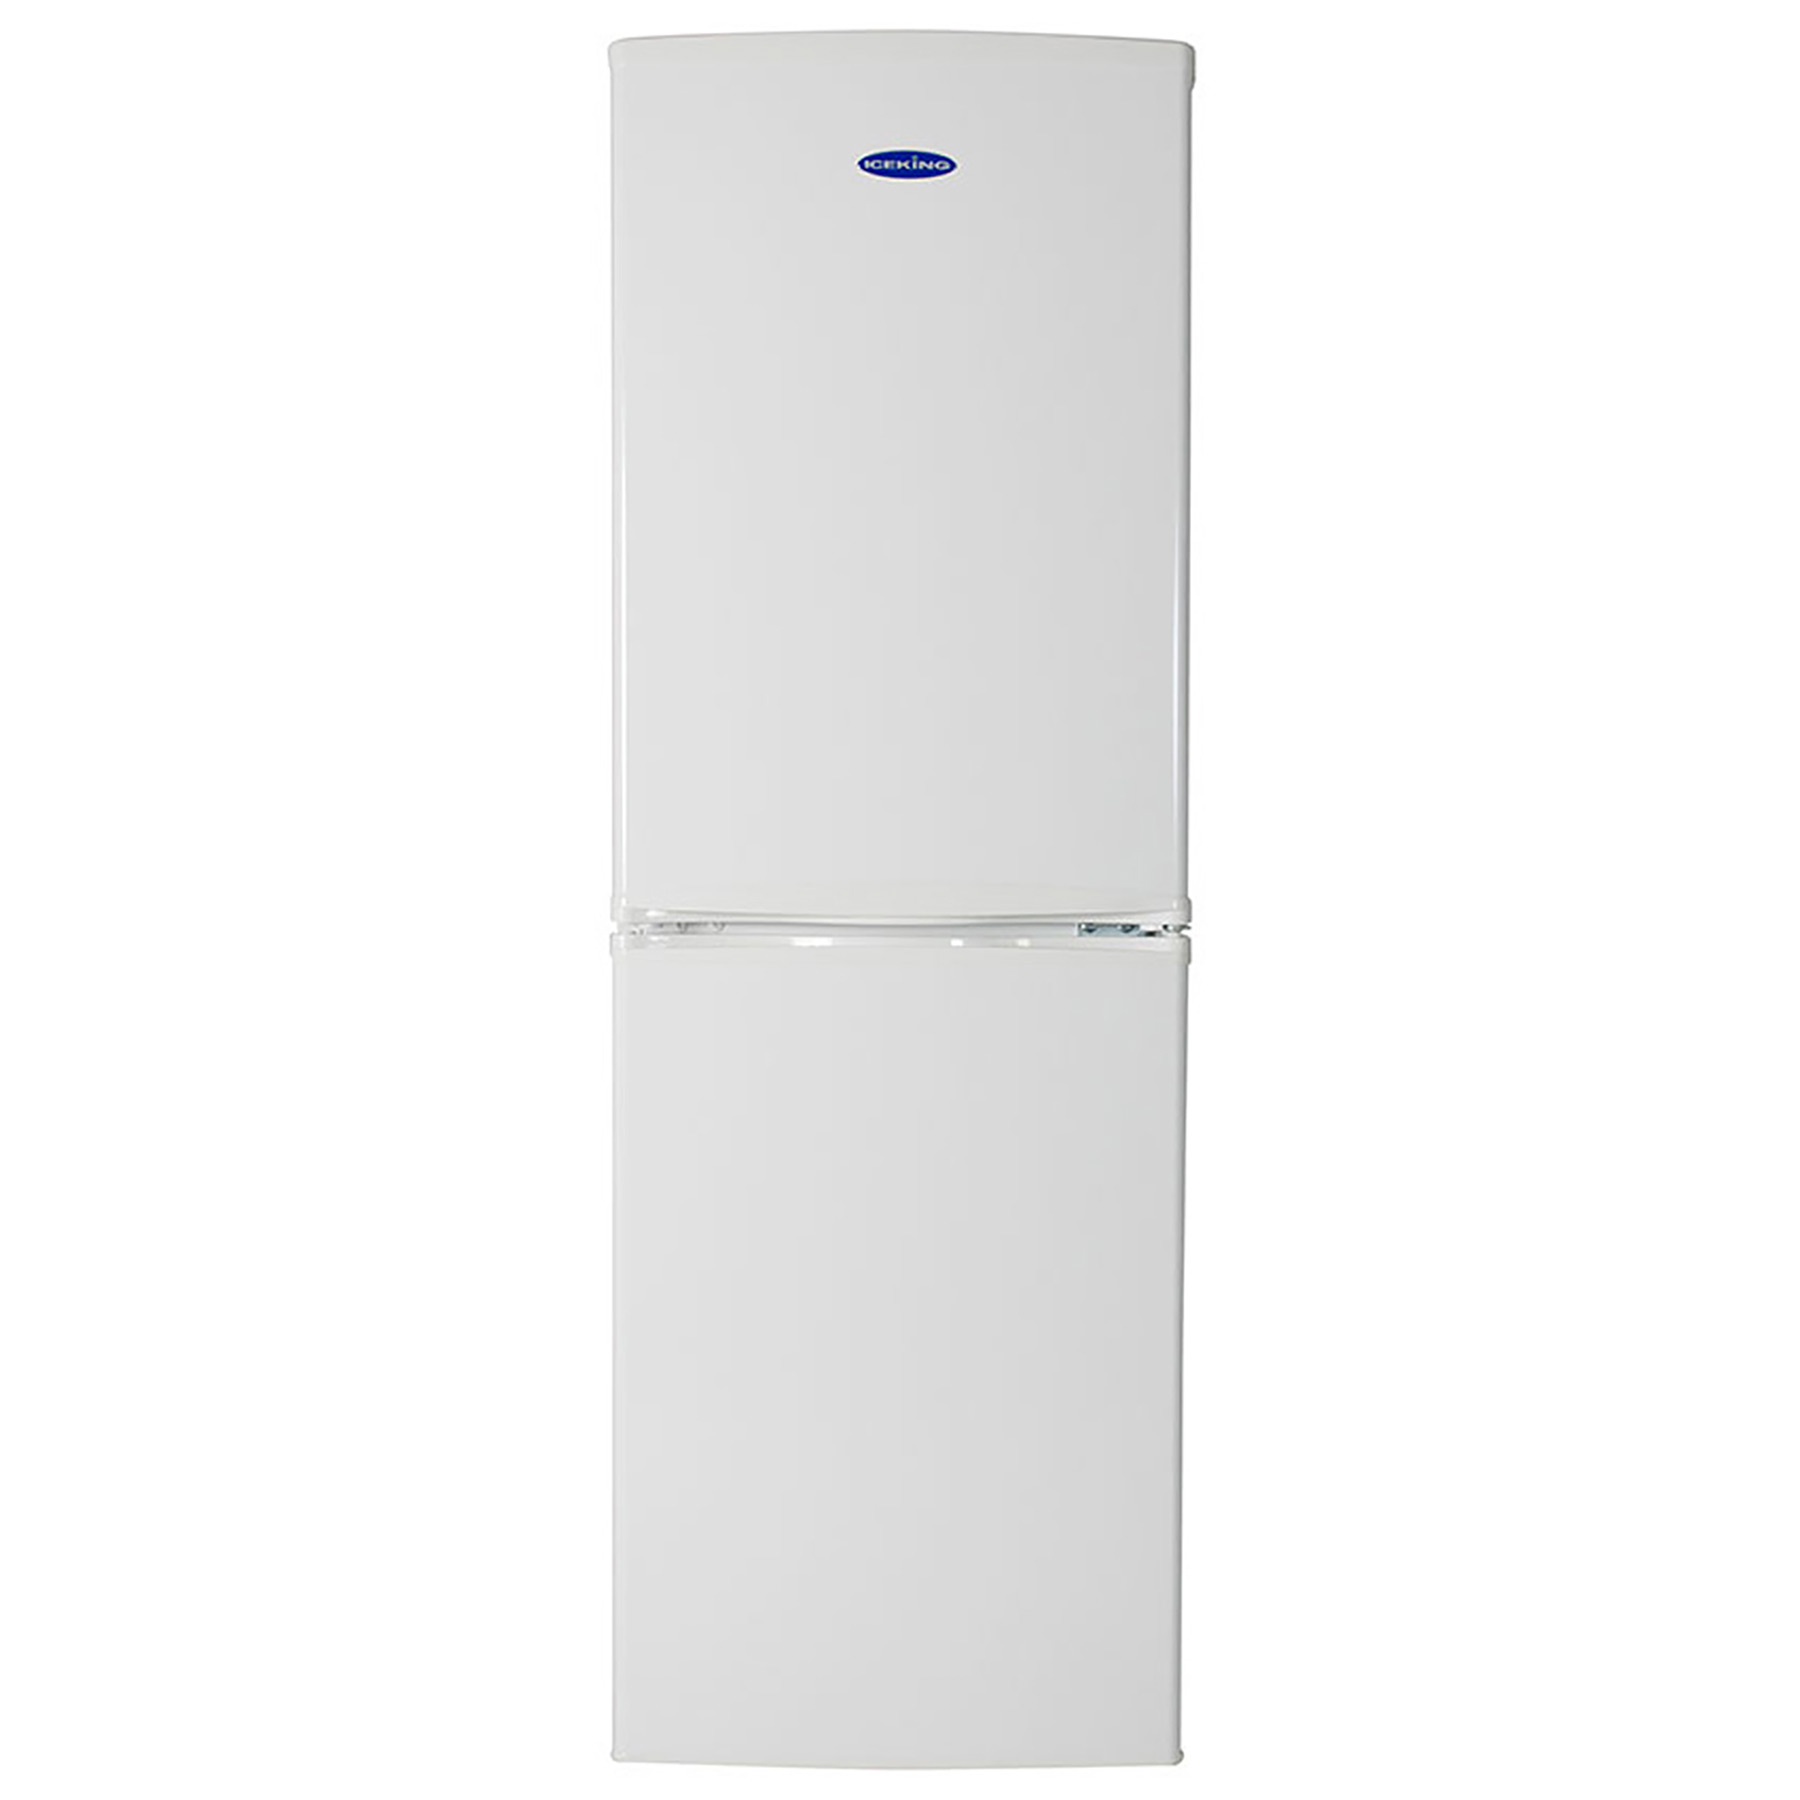 Iceking IK8952W E 48cm Fridge Freezer in White 1 44m F Rated